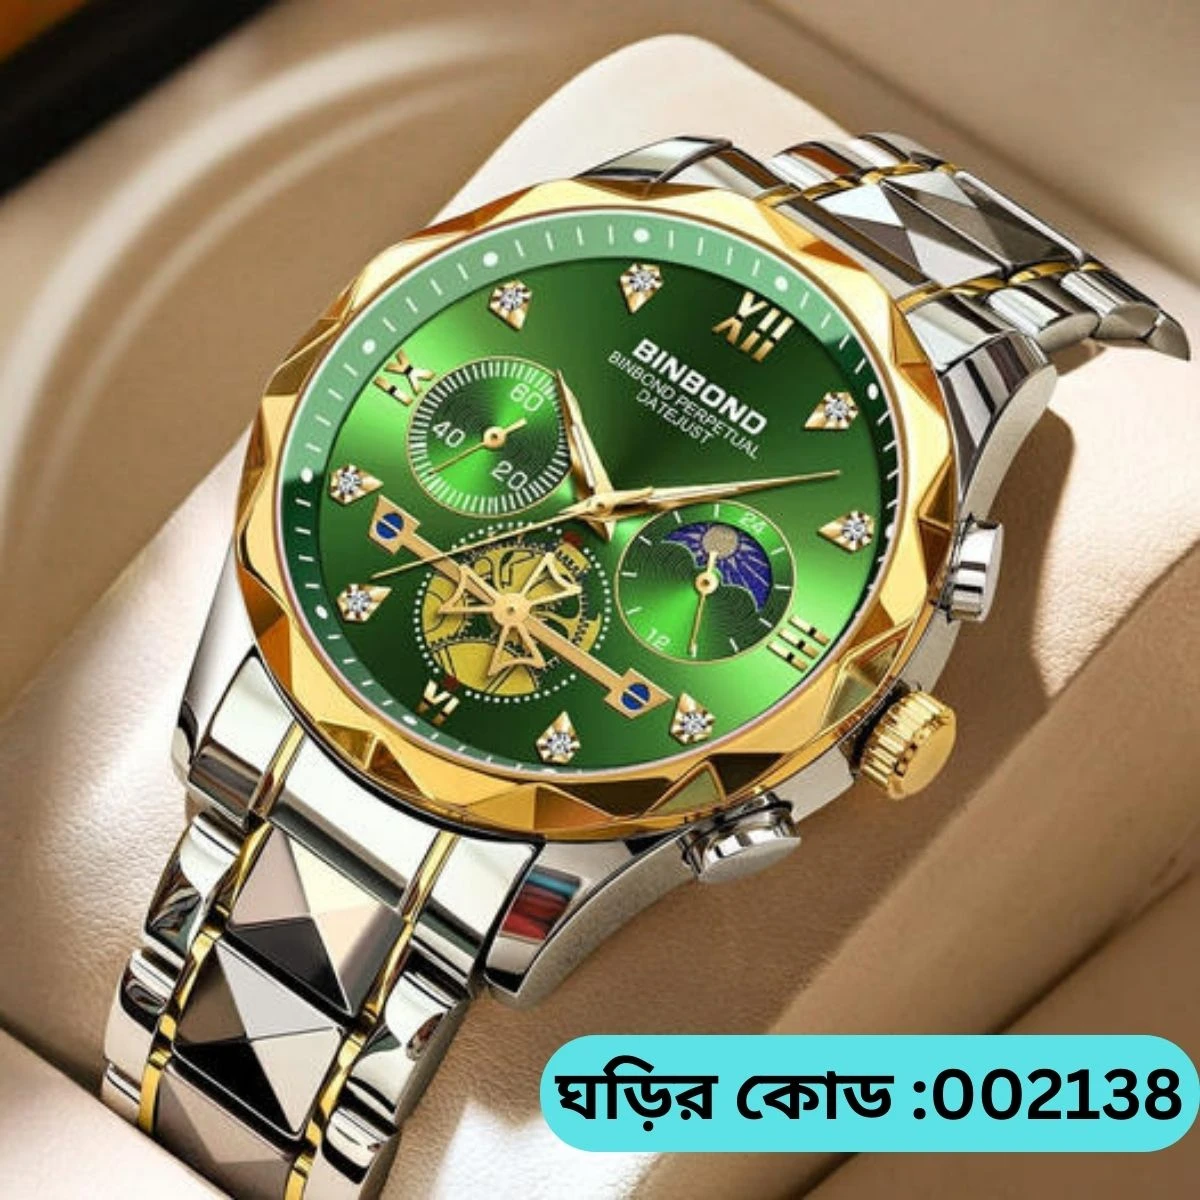 New Luxury Binbond Brand Men's Luminous Watches Stainless Steel Waterproof BINBOND Chronograph TOTON AR DIAL GREEN COOLER WATCH